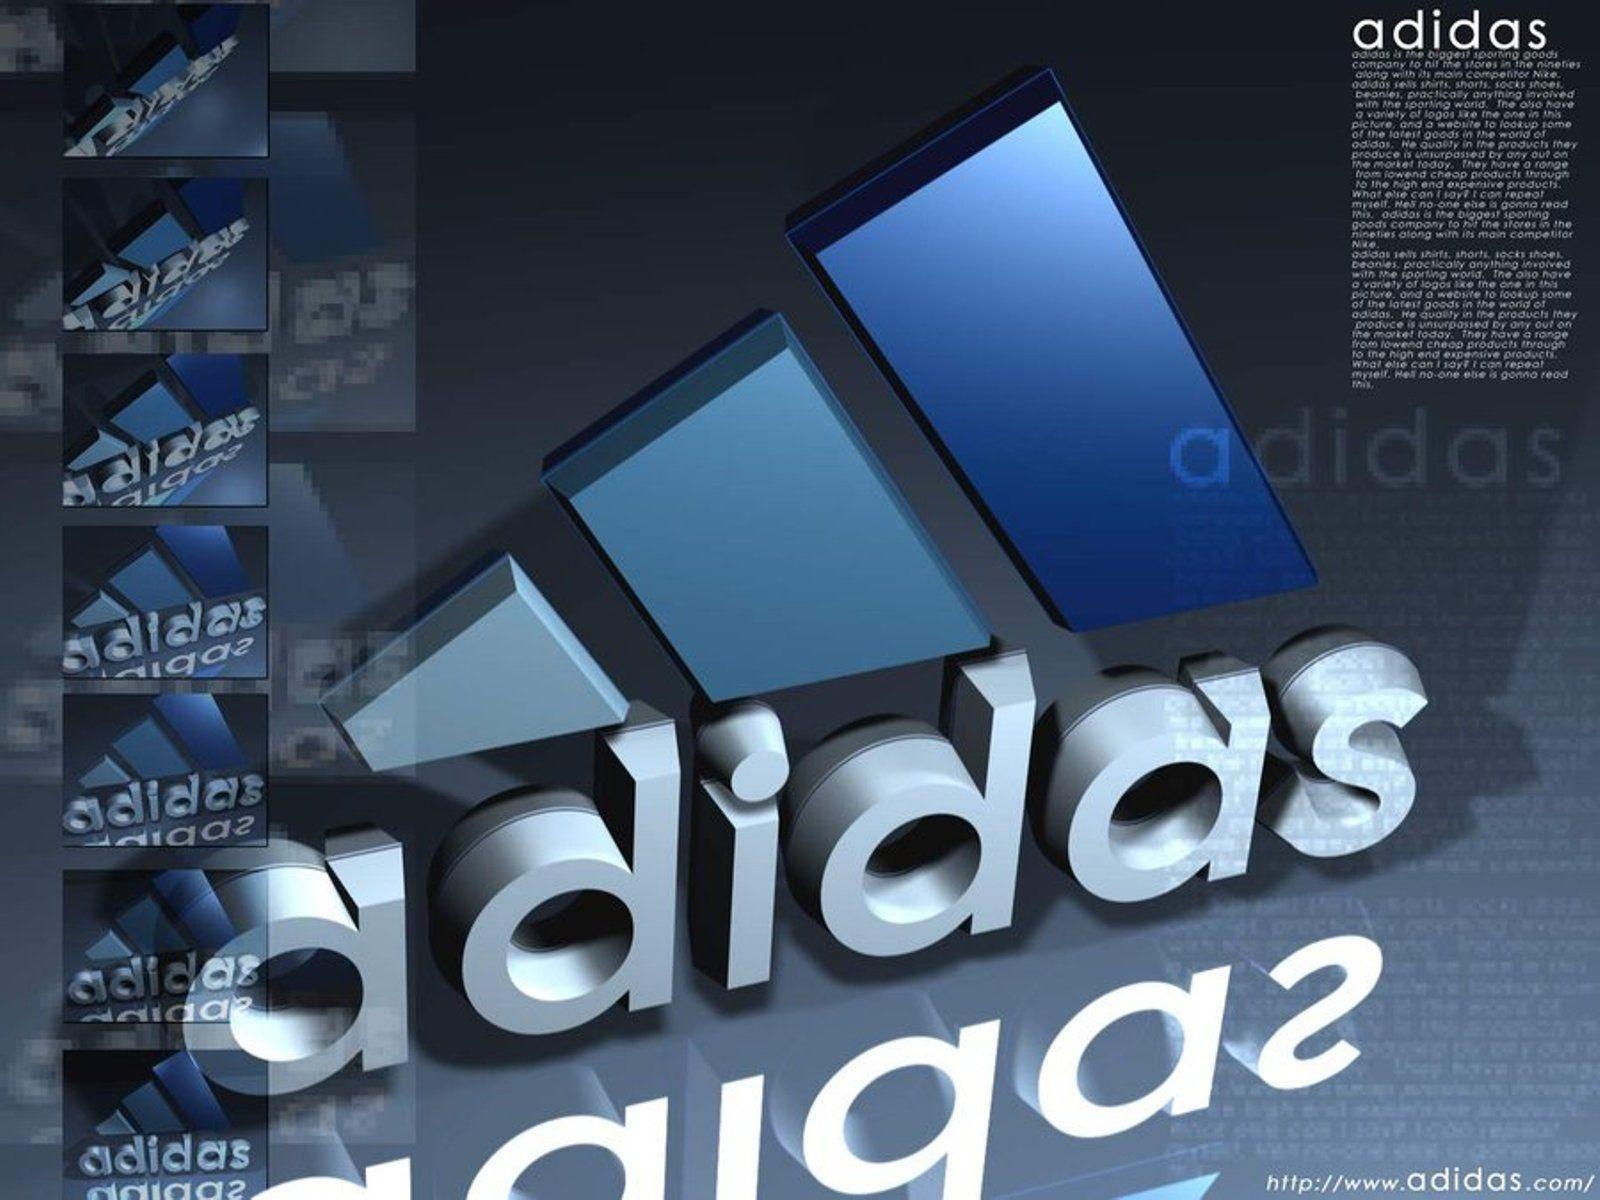 adidas logo 3d wallpaper